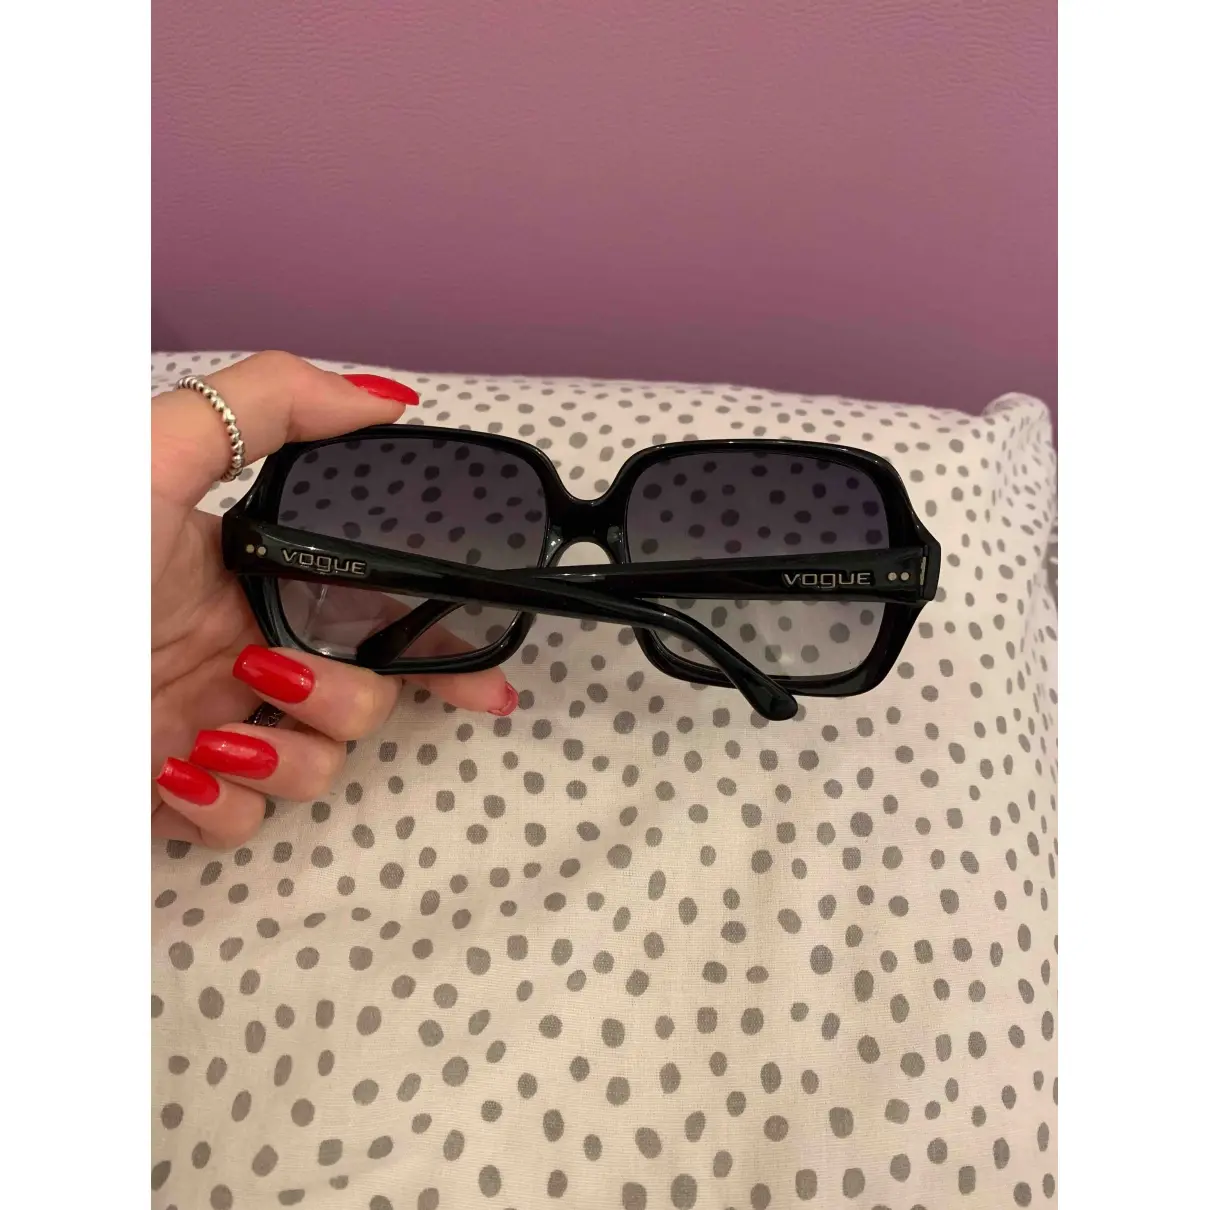 Buy Vogue Oversized sunglasses online